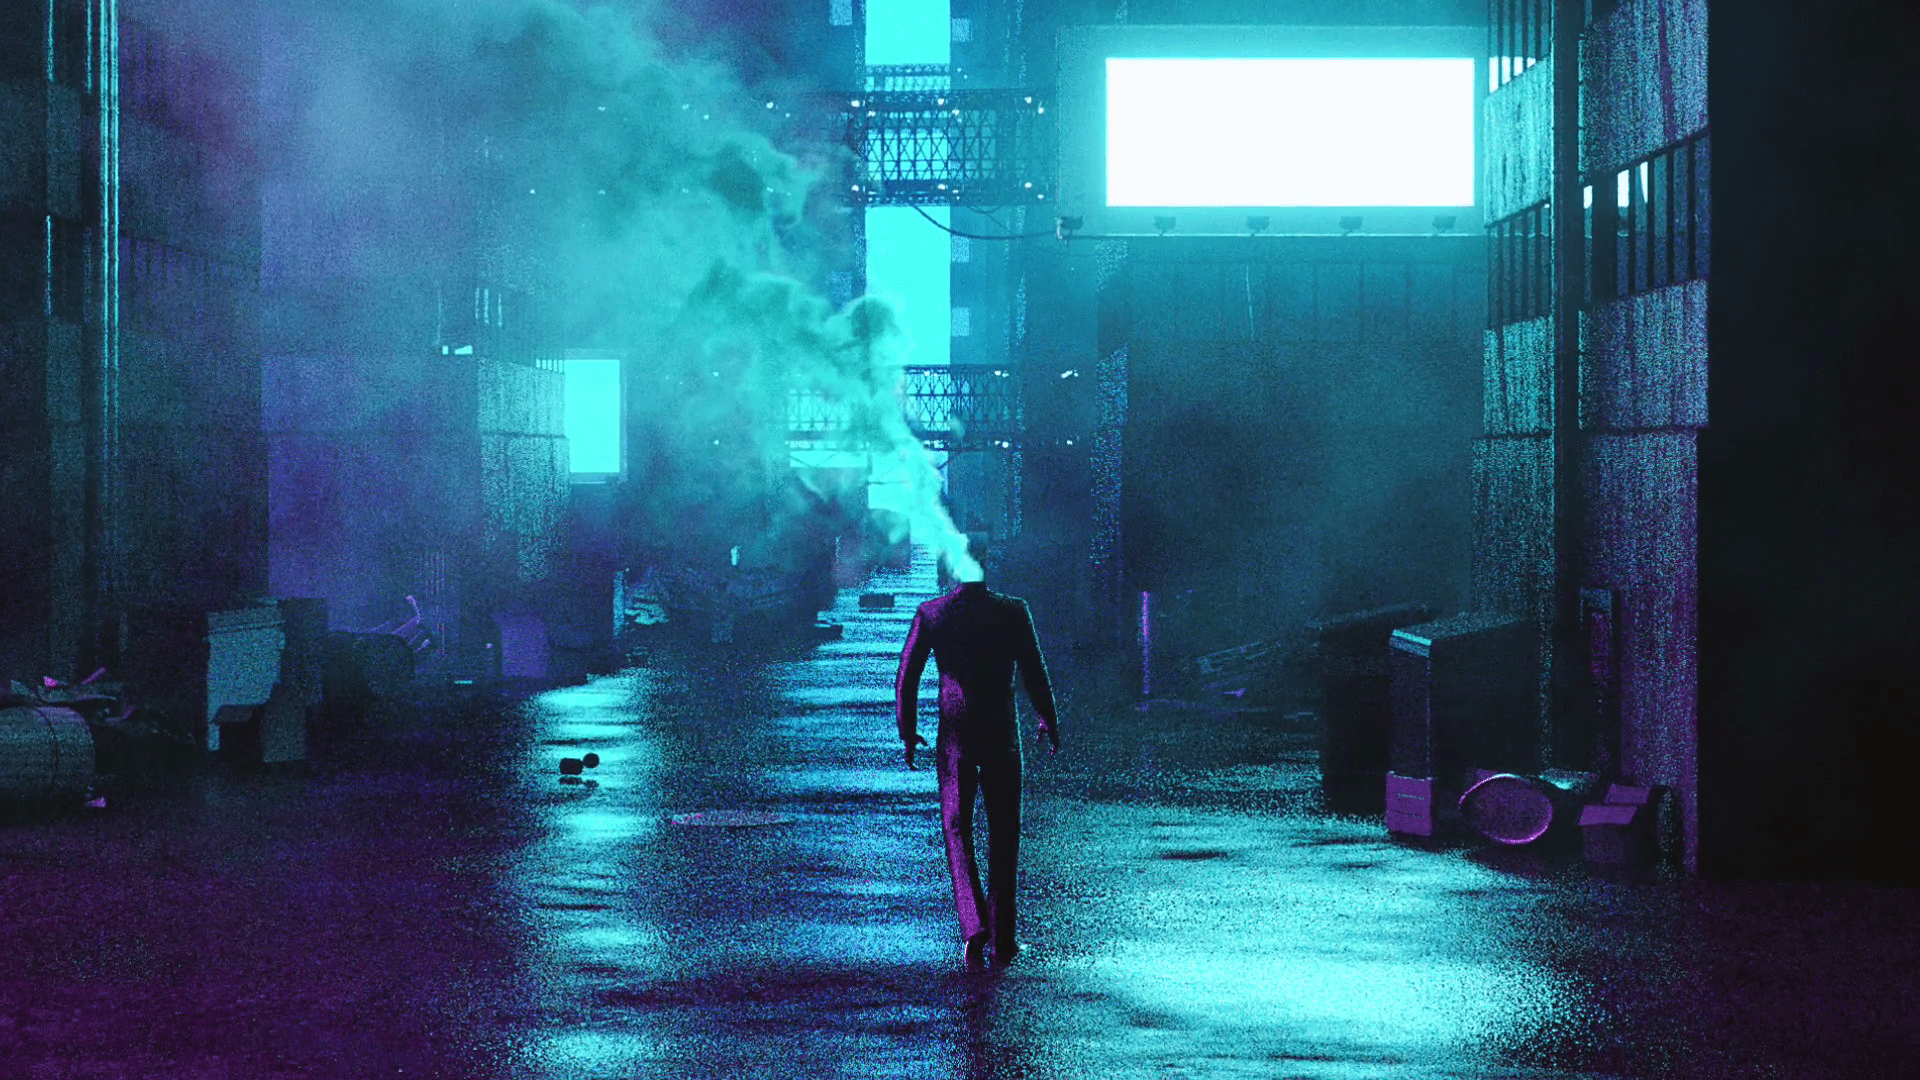 Wallpaper / Jean Michel Jarre, electronic music, music, Equinoxe, cyan, wet, night, wet street, smoke, alleyway, urban free download